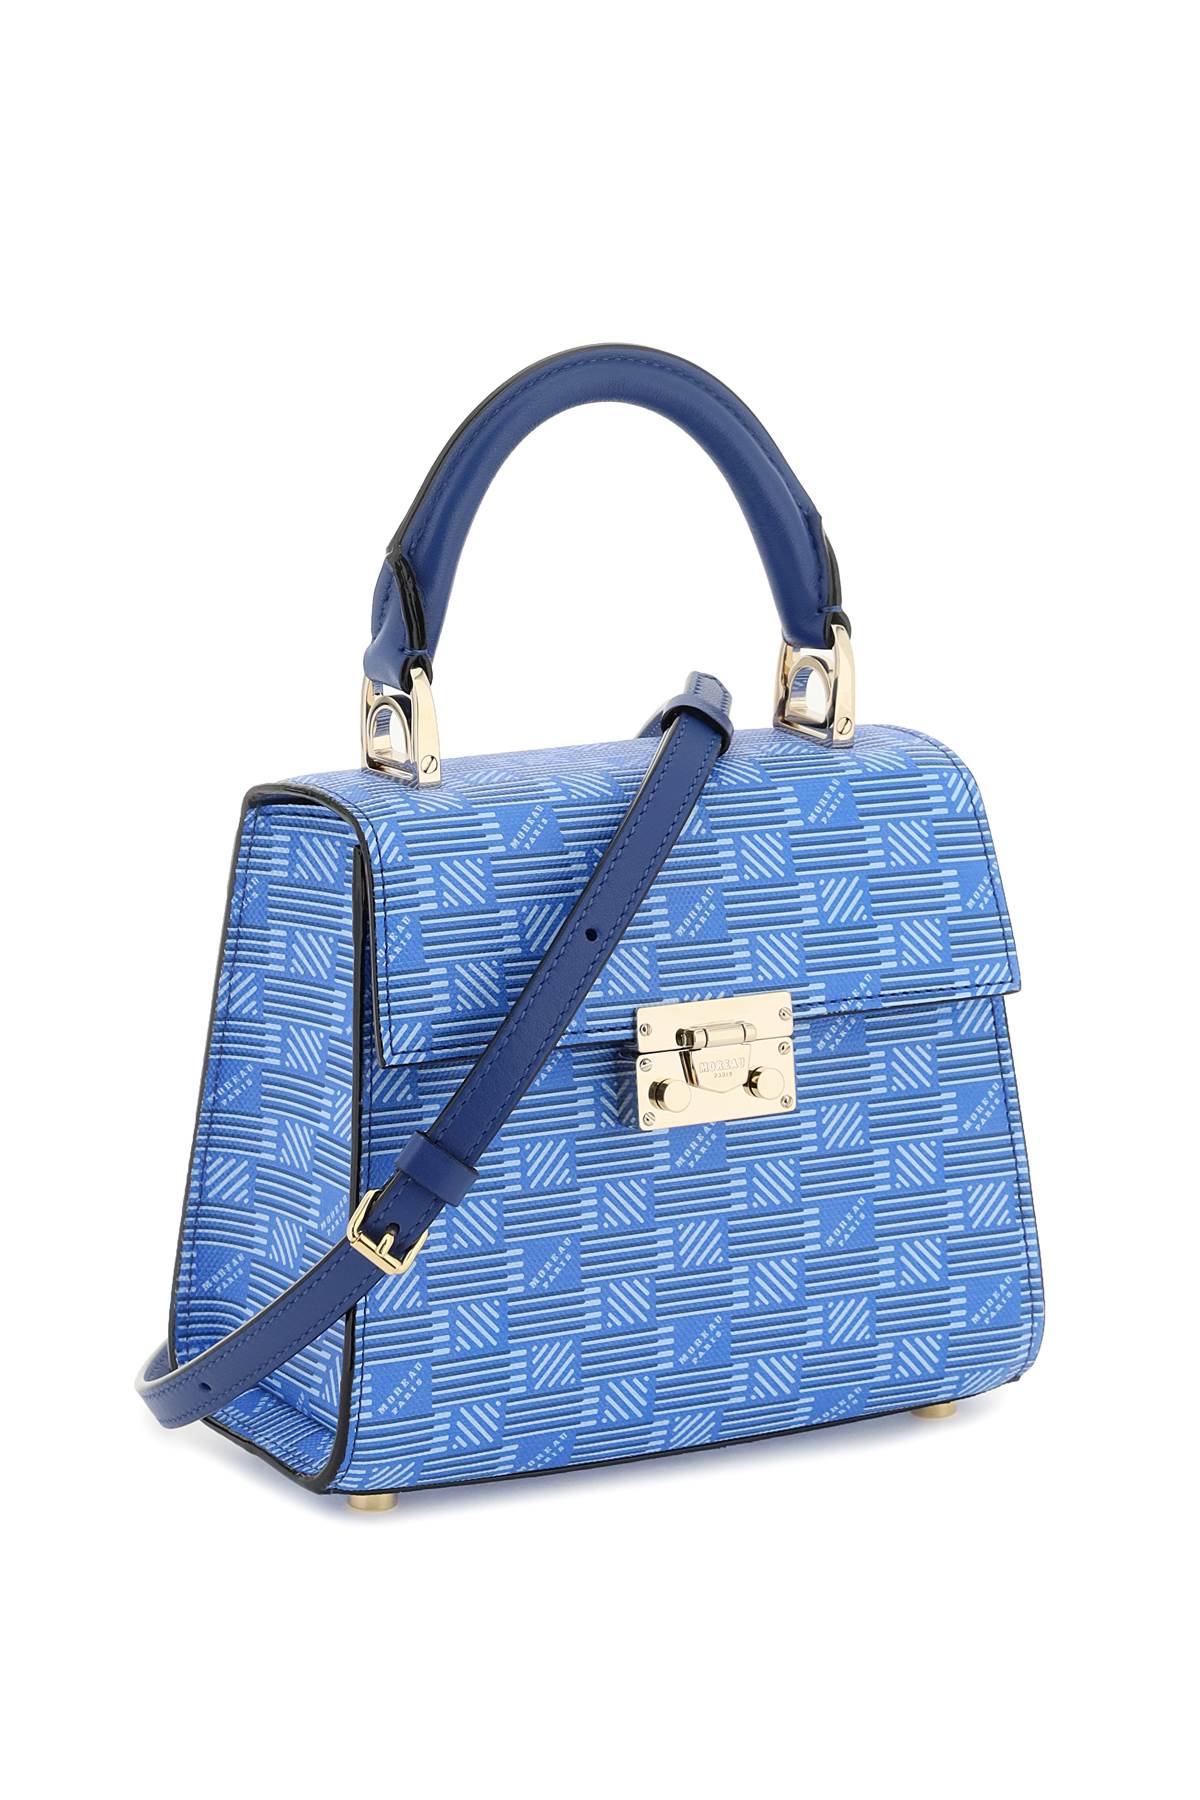 MOREAU PARIS Blue Moreauette Handbag for Women - SS23 Collection